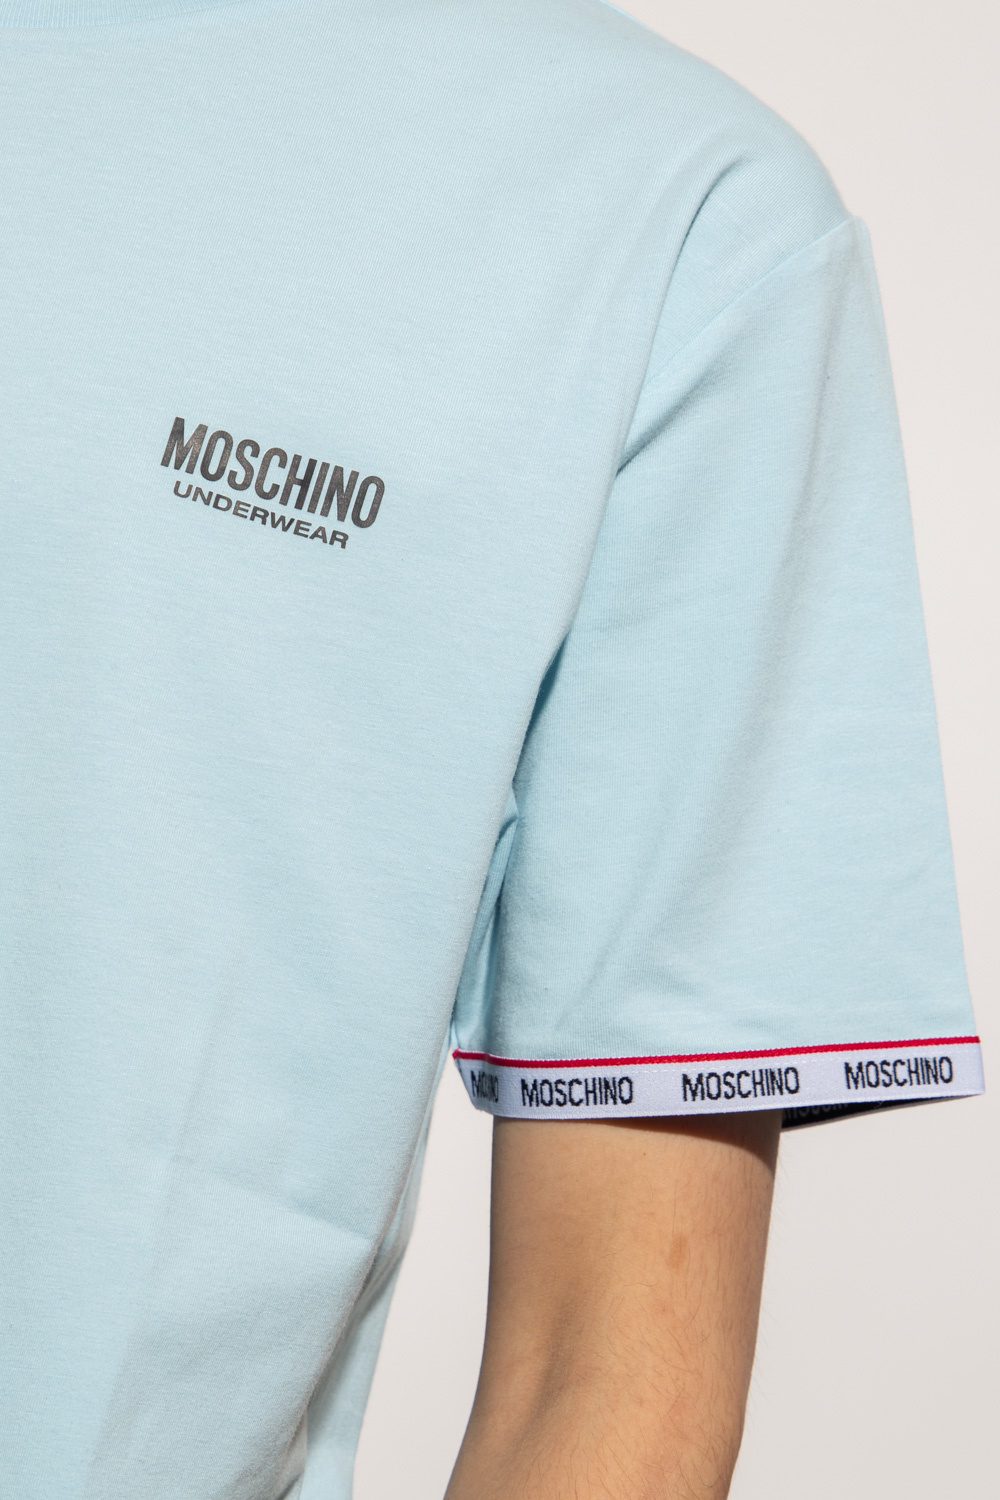 Moschino T-shirt Qasimi with logo